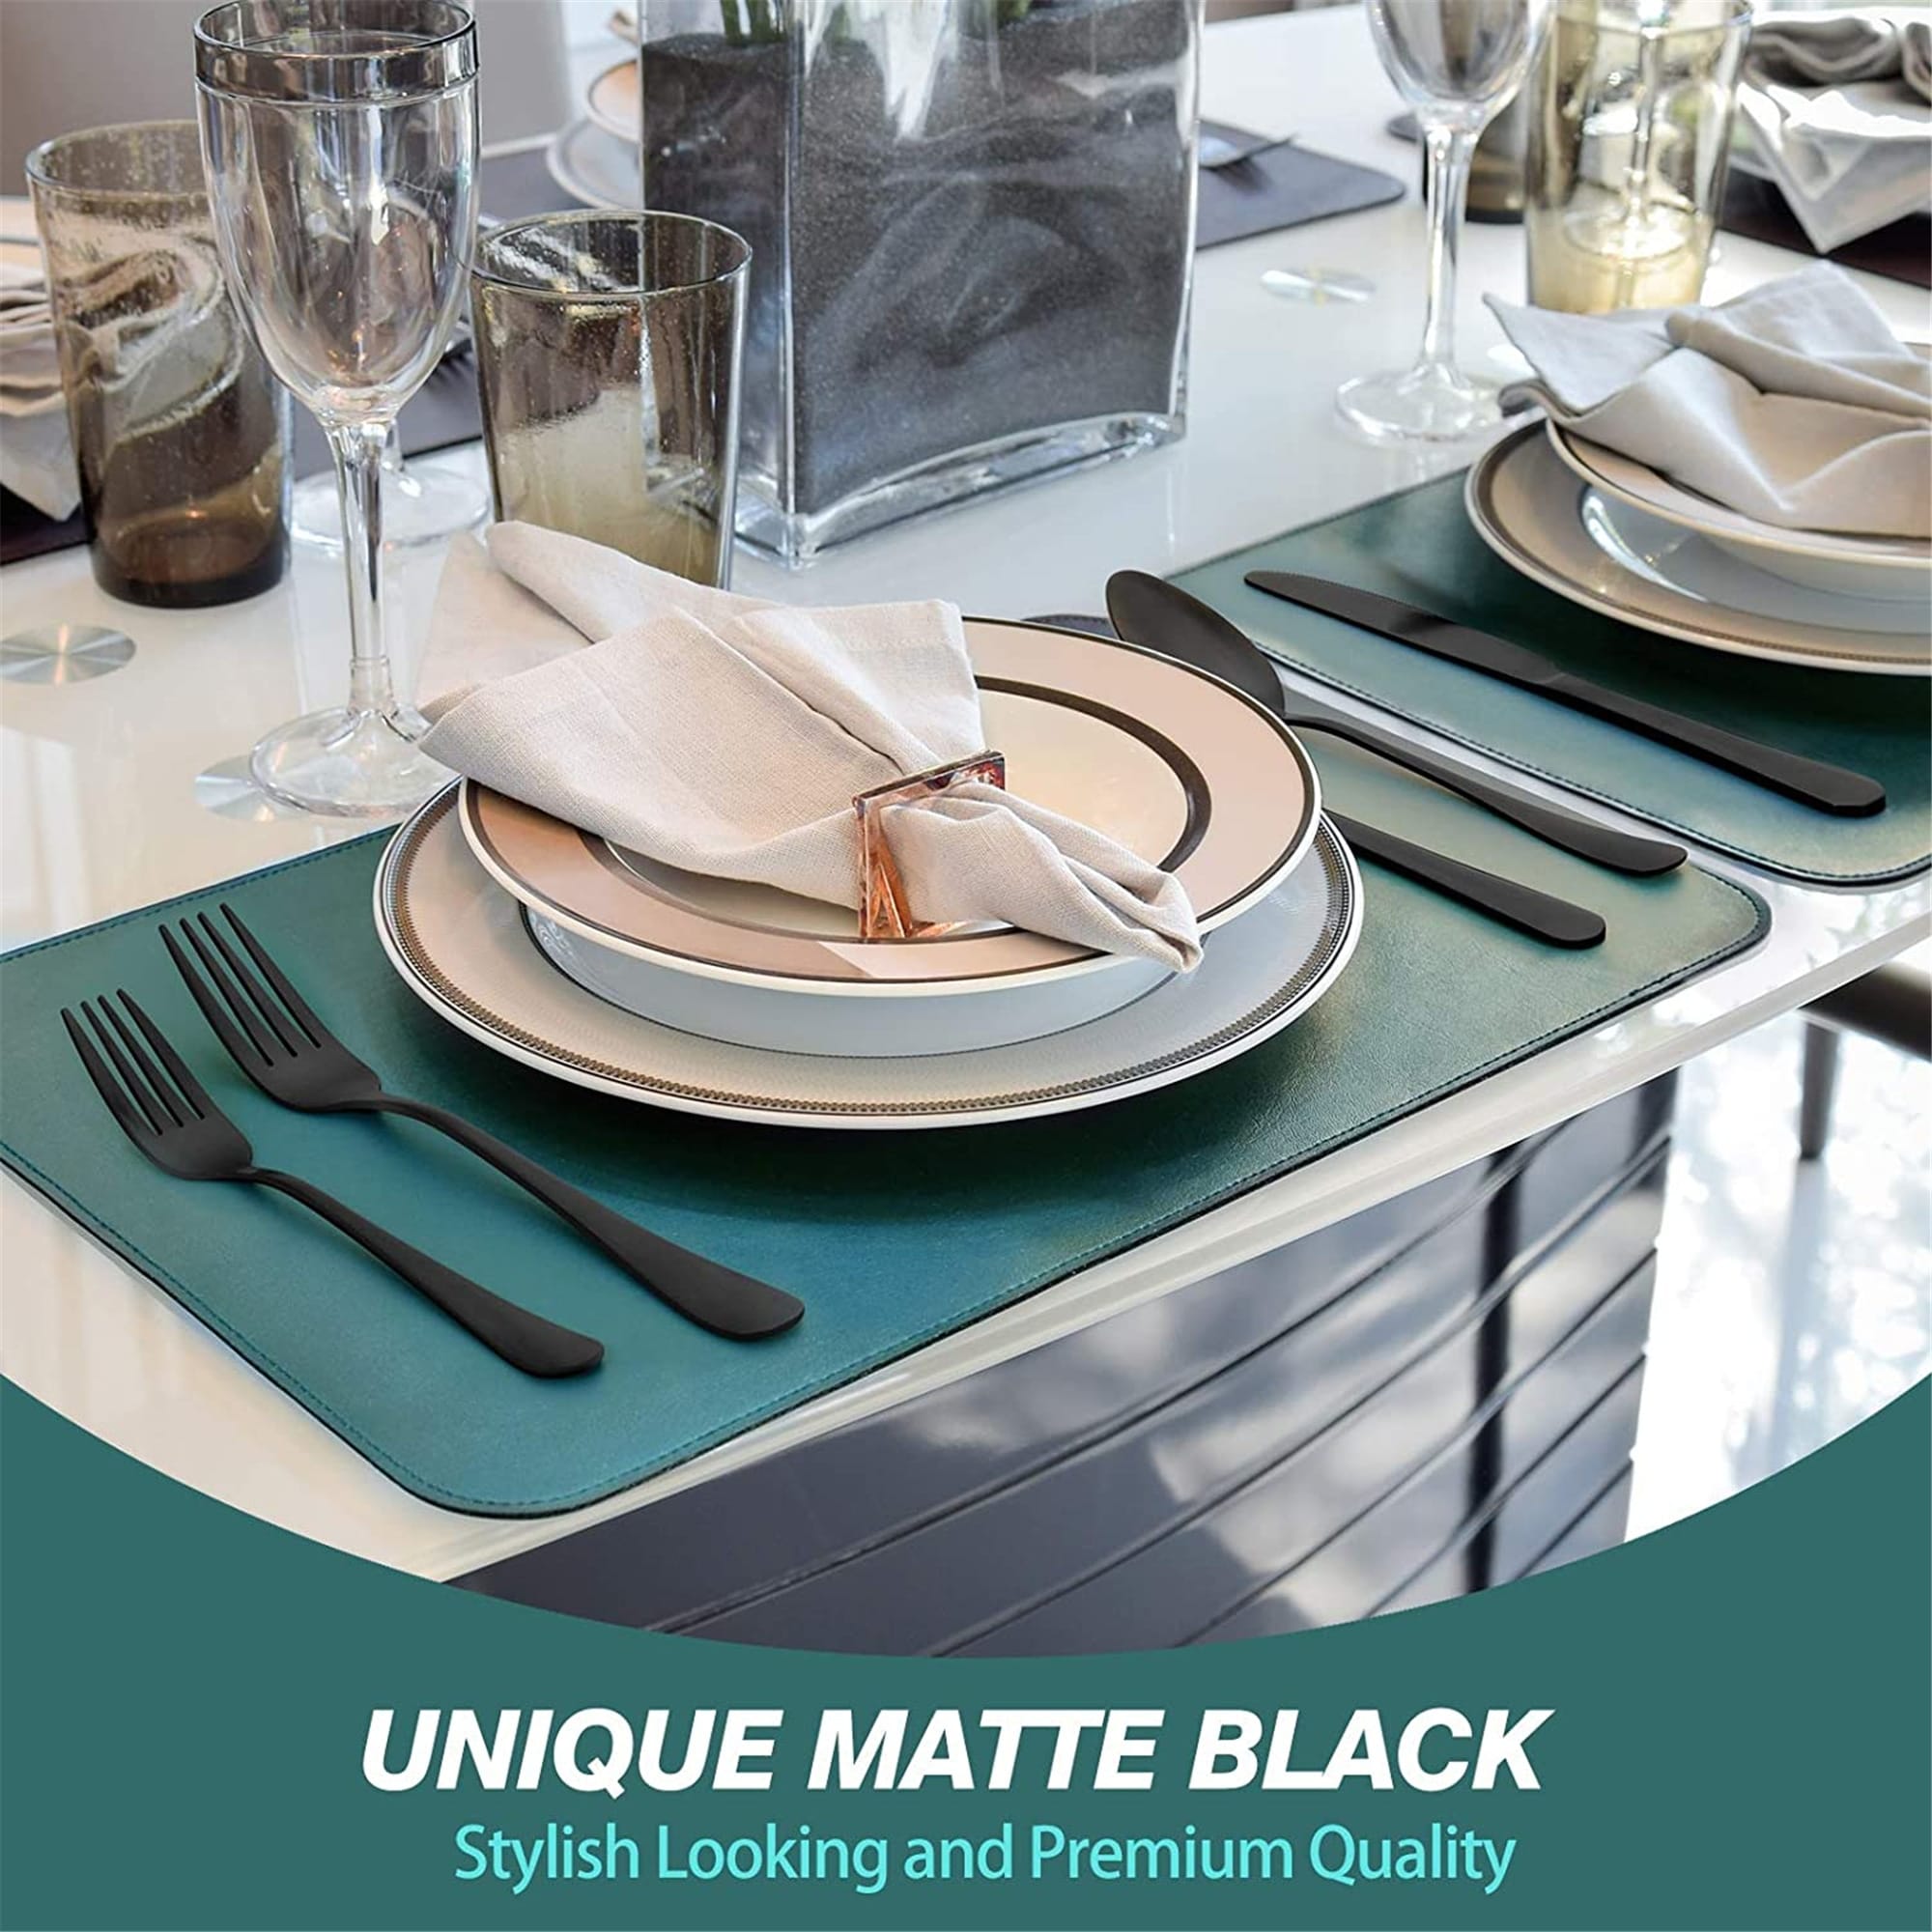 72-Piece Matte Black Silverware Set with Steak Knives for 12 